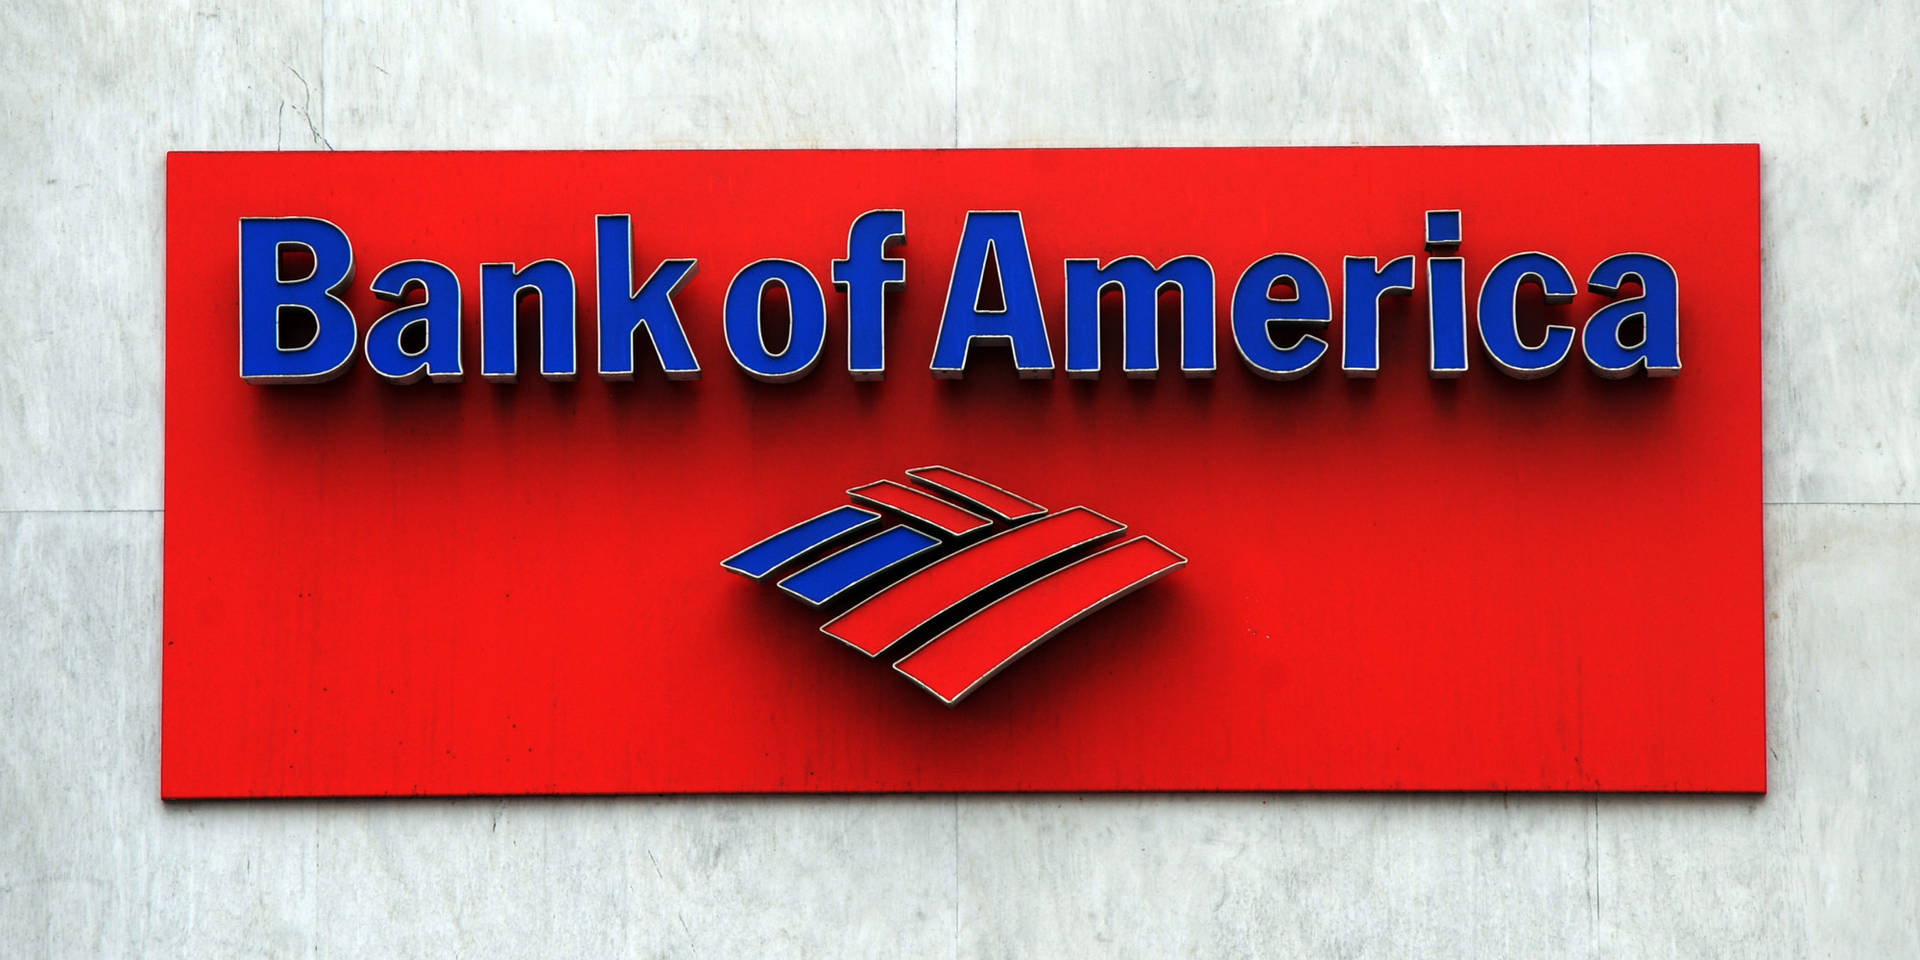 Bank Of America Name And Logo